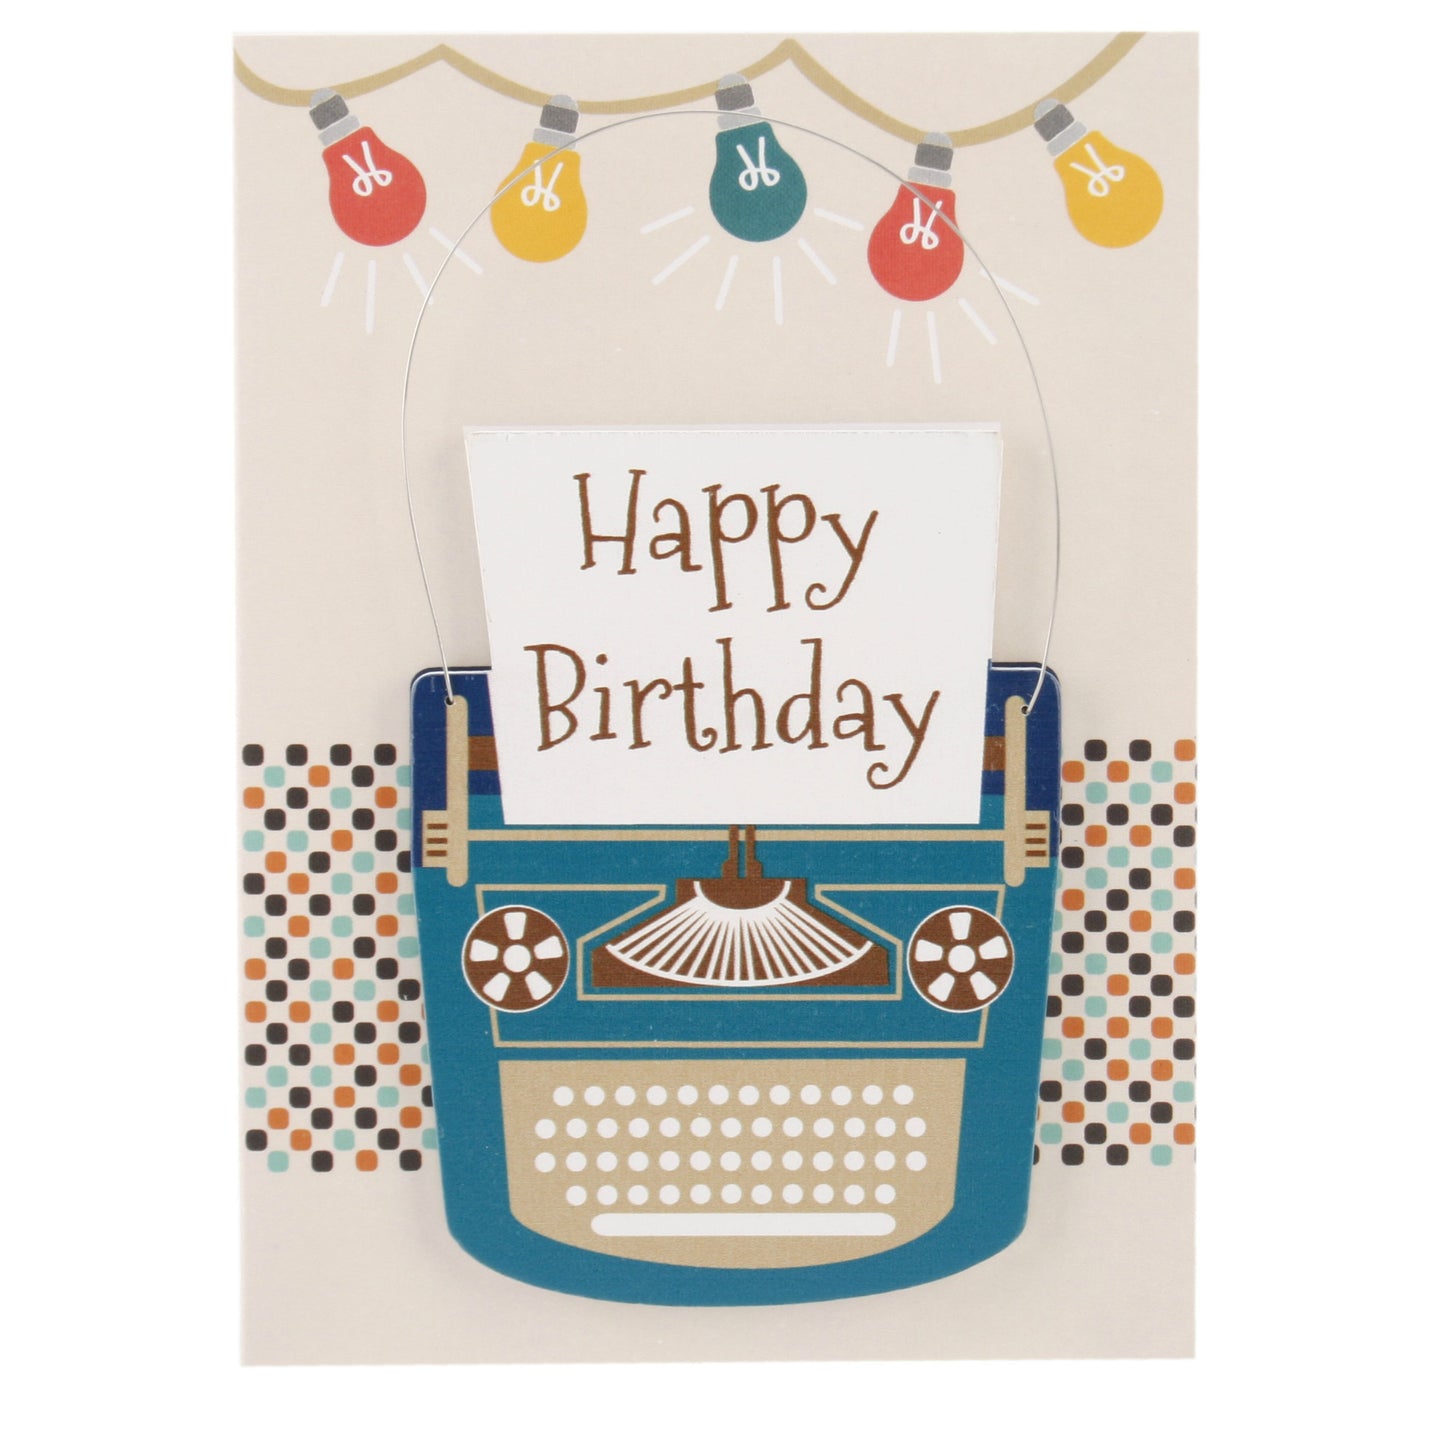 Happy Birthday Card and Hanging Keepsake Vintage Typewriter